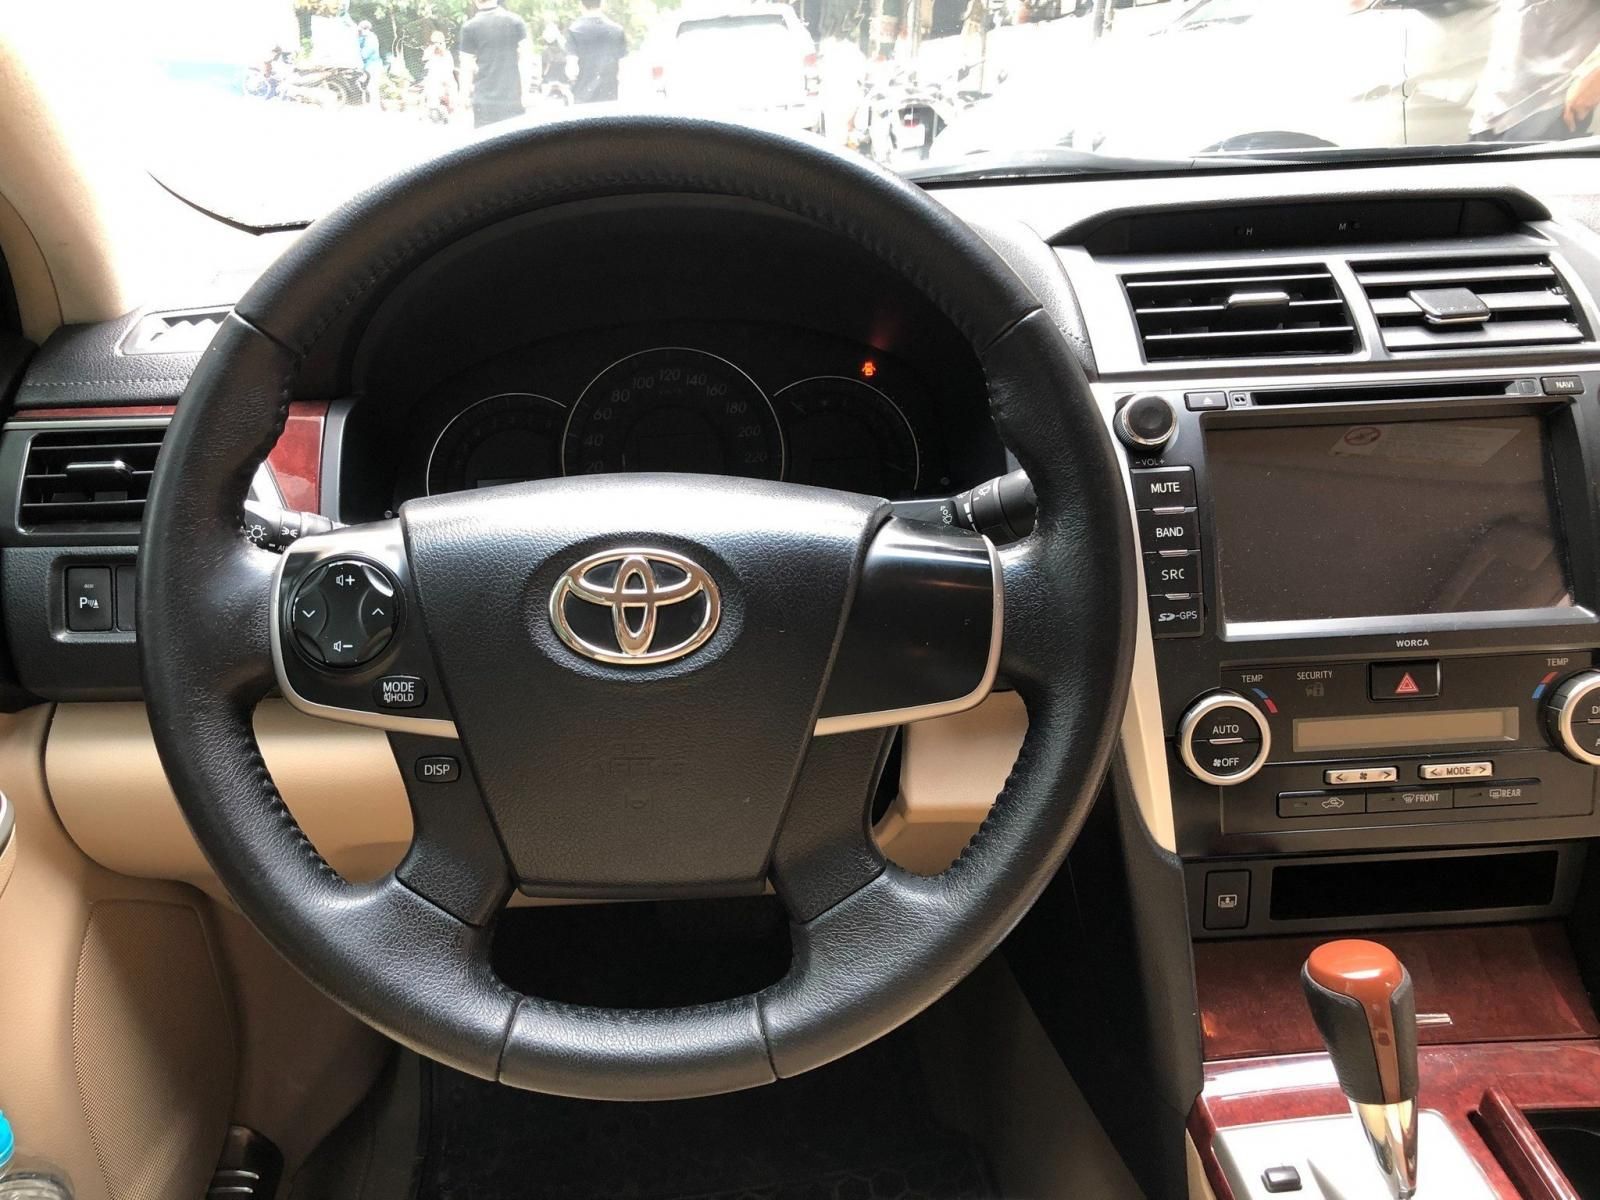 Toyota Camry 2014 - Màu đen, biển Hà Nội